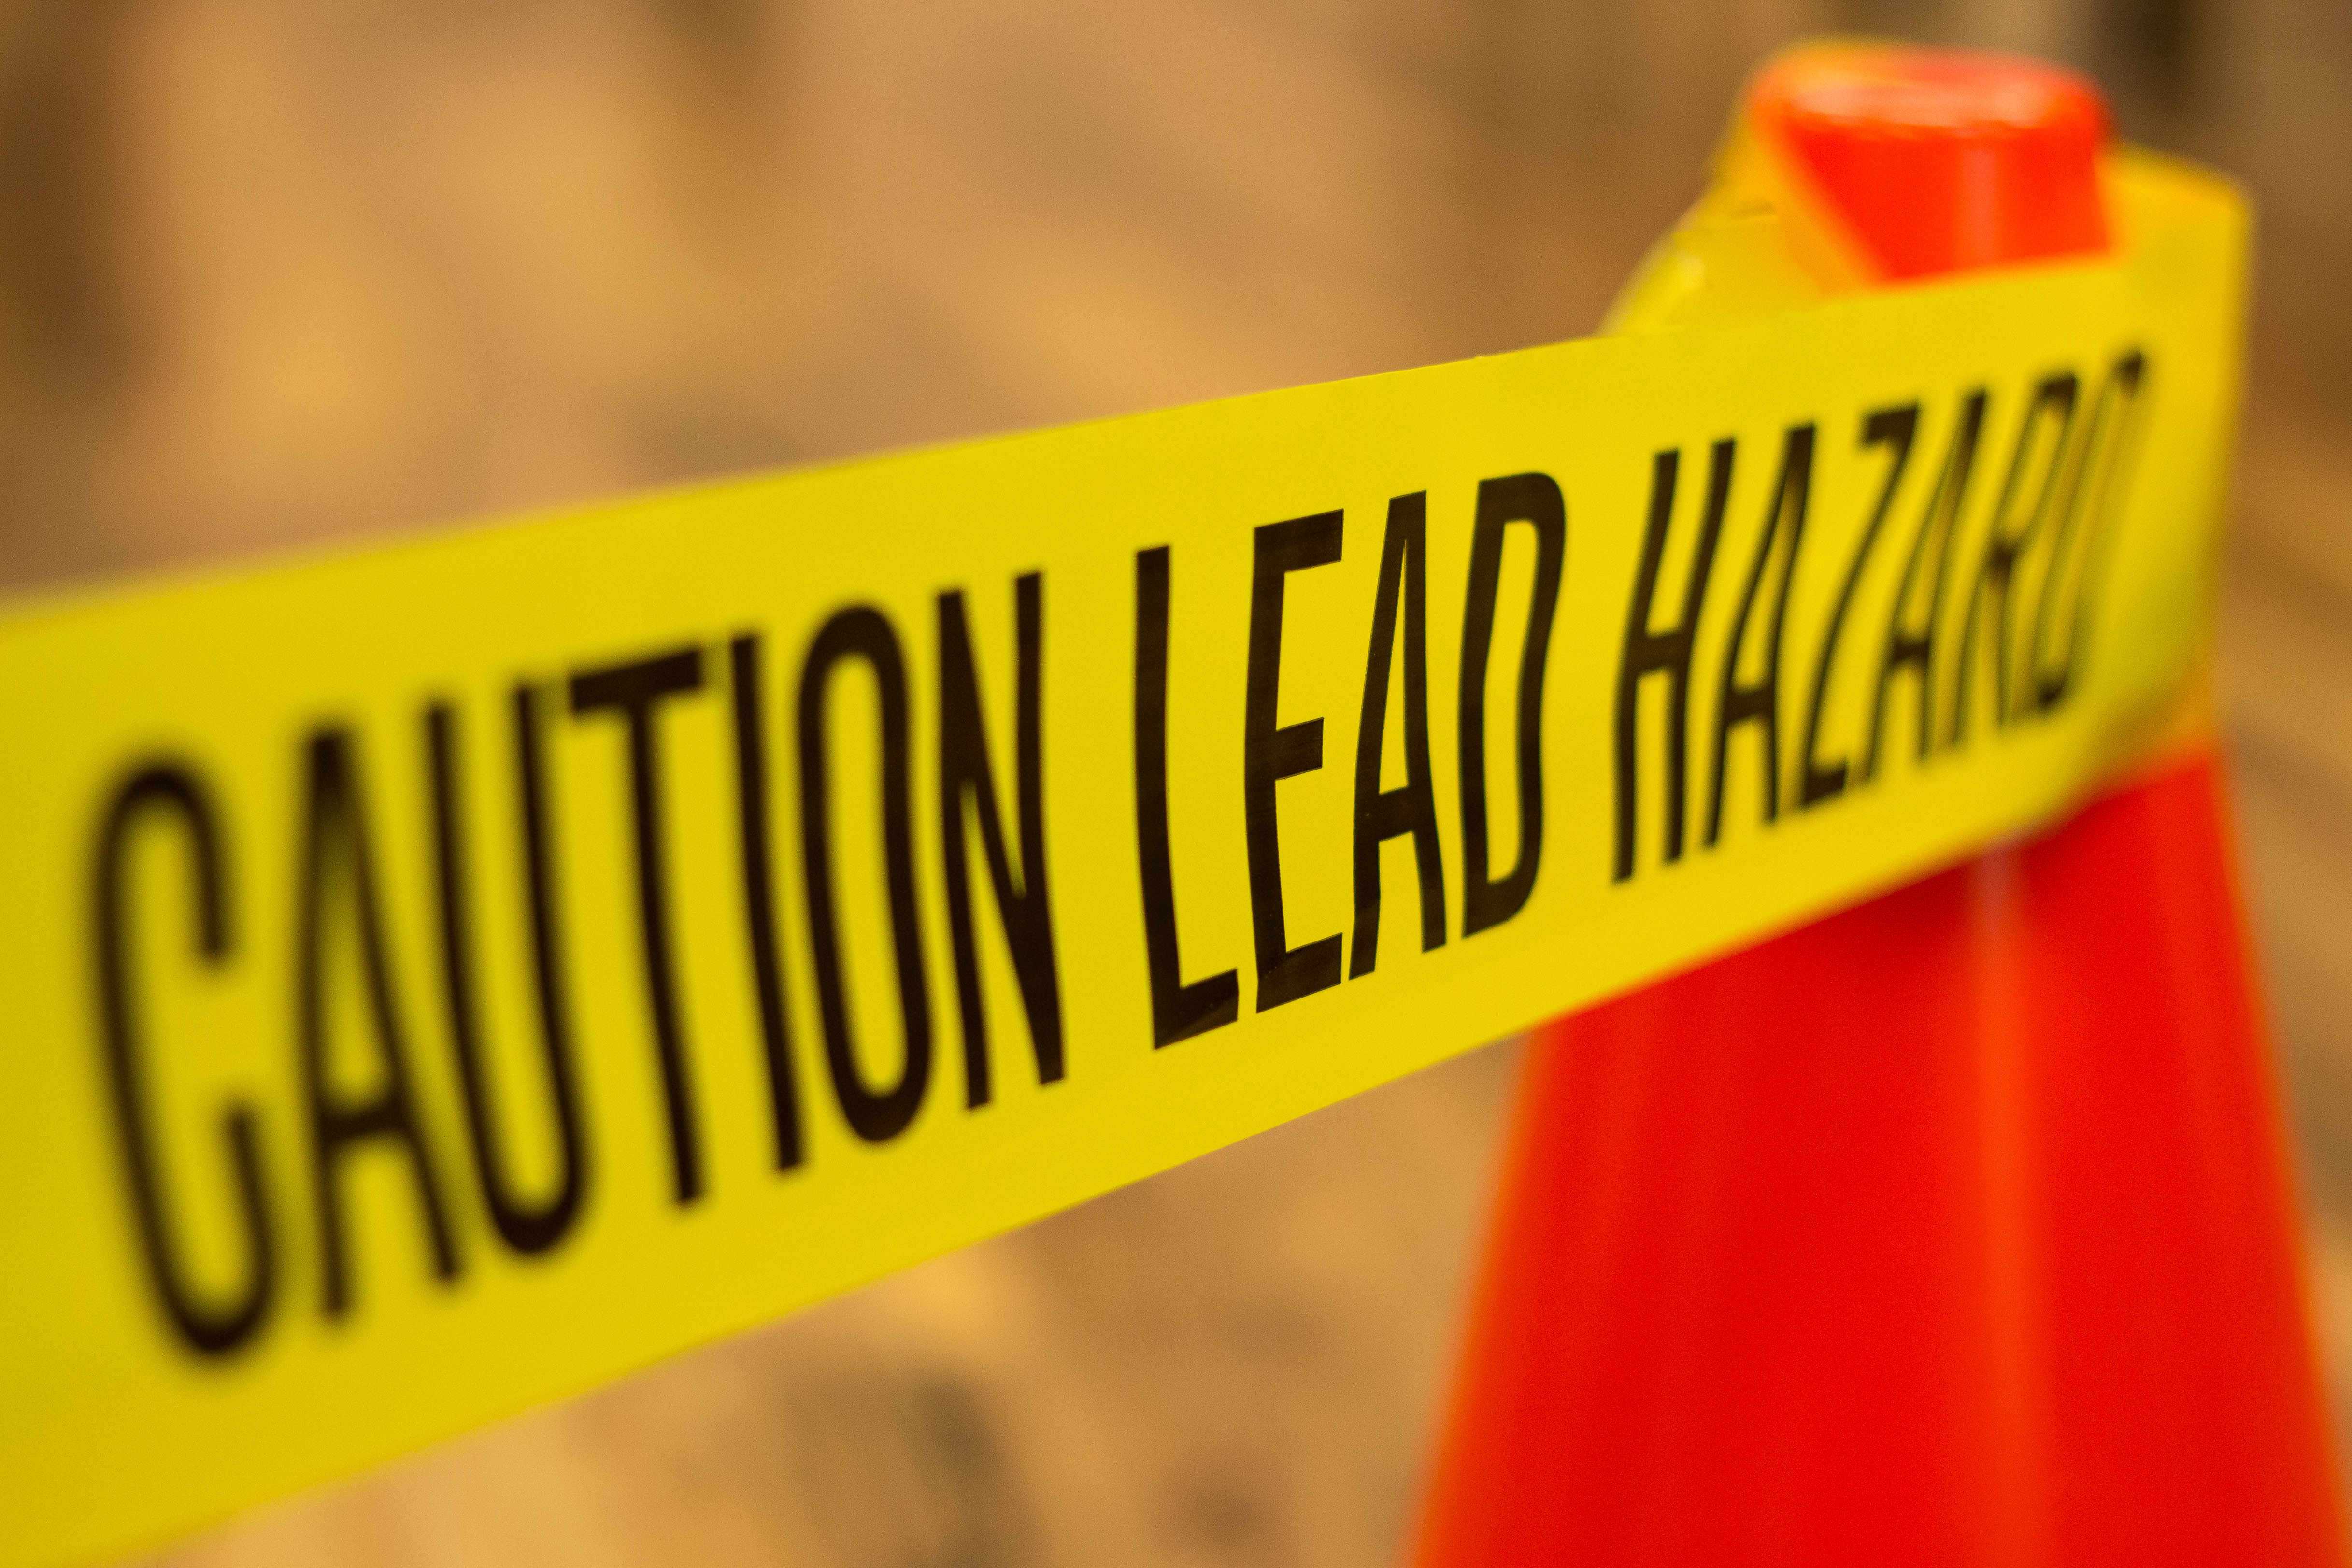 Caution tape reading caution lead hazard